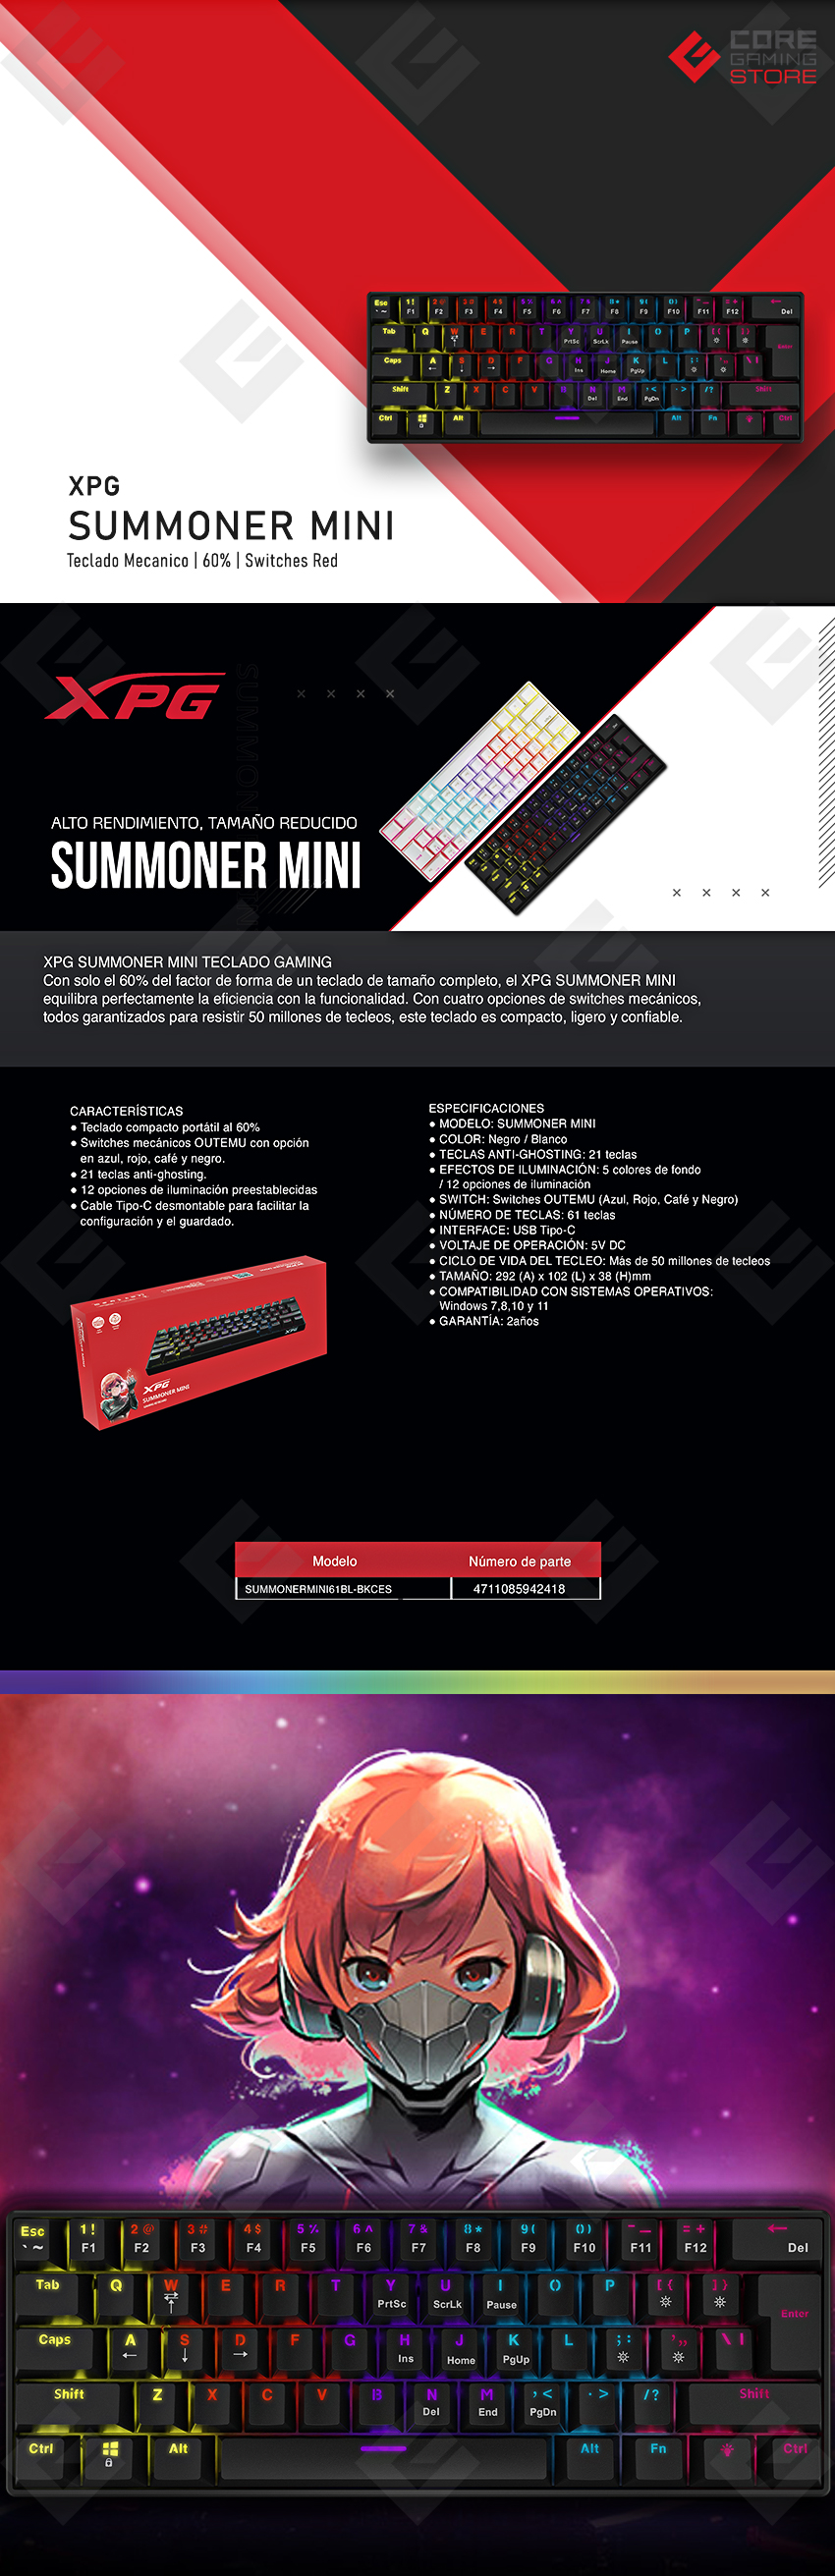 Teclado Gamer Mecanico XPG Summoner Mini | Negro | Switches Outemu Red | 60% - SUMMONERMINI61RD-BKCES